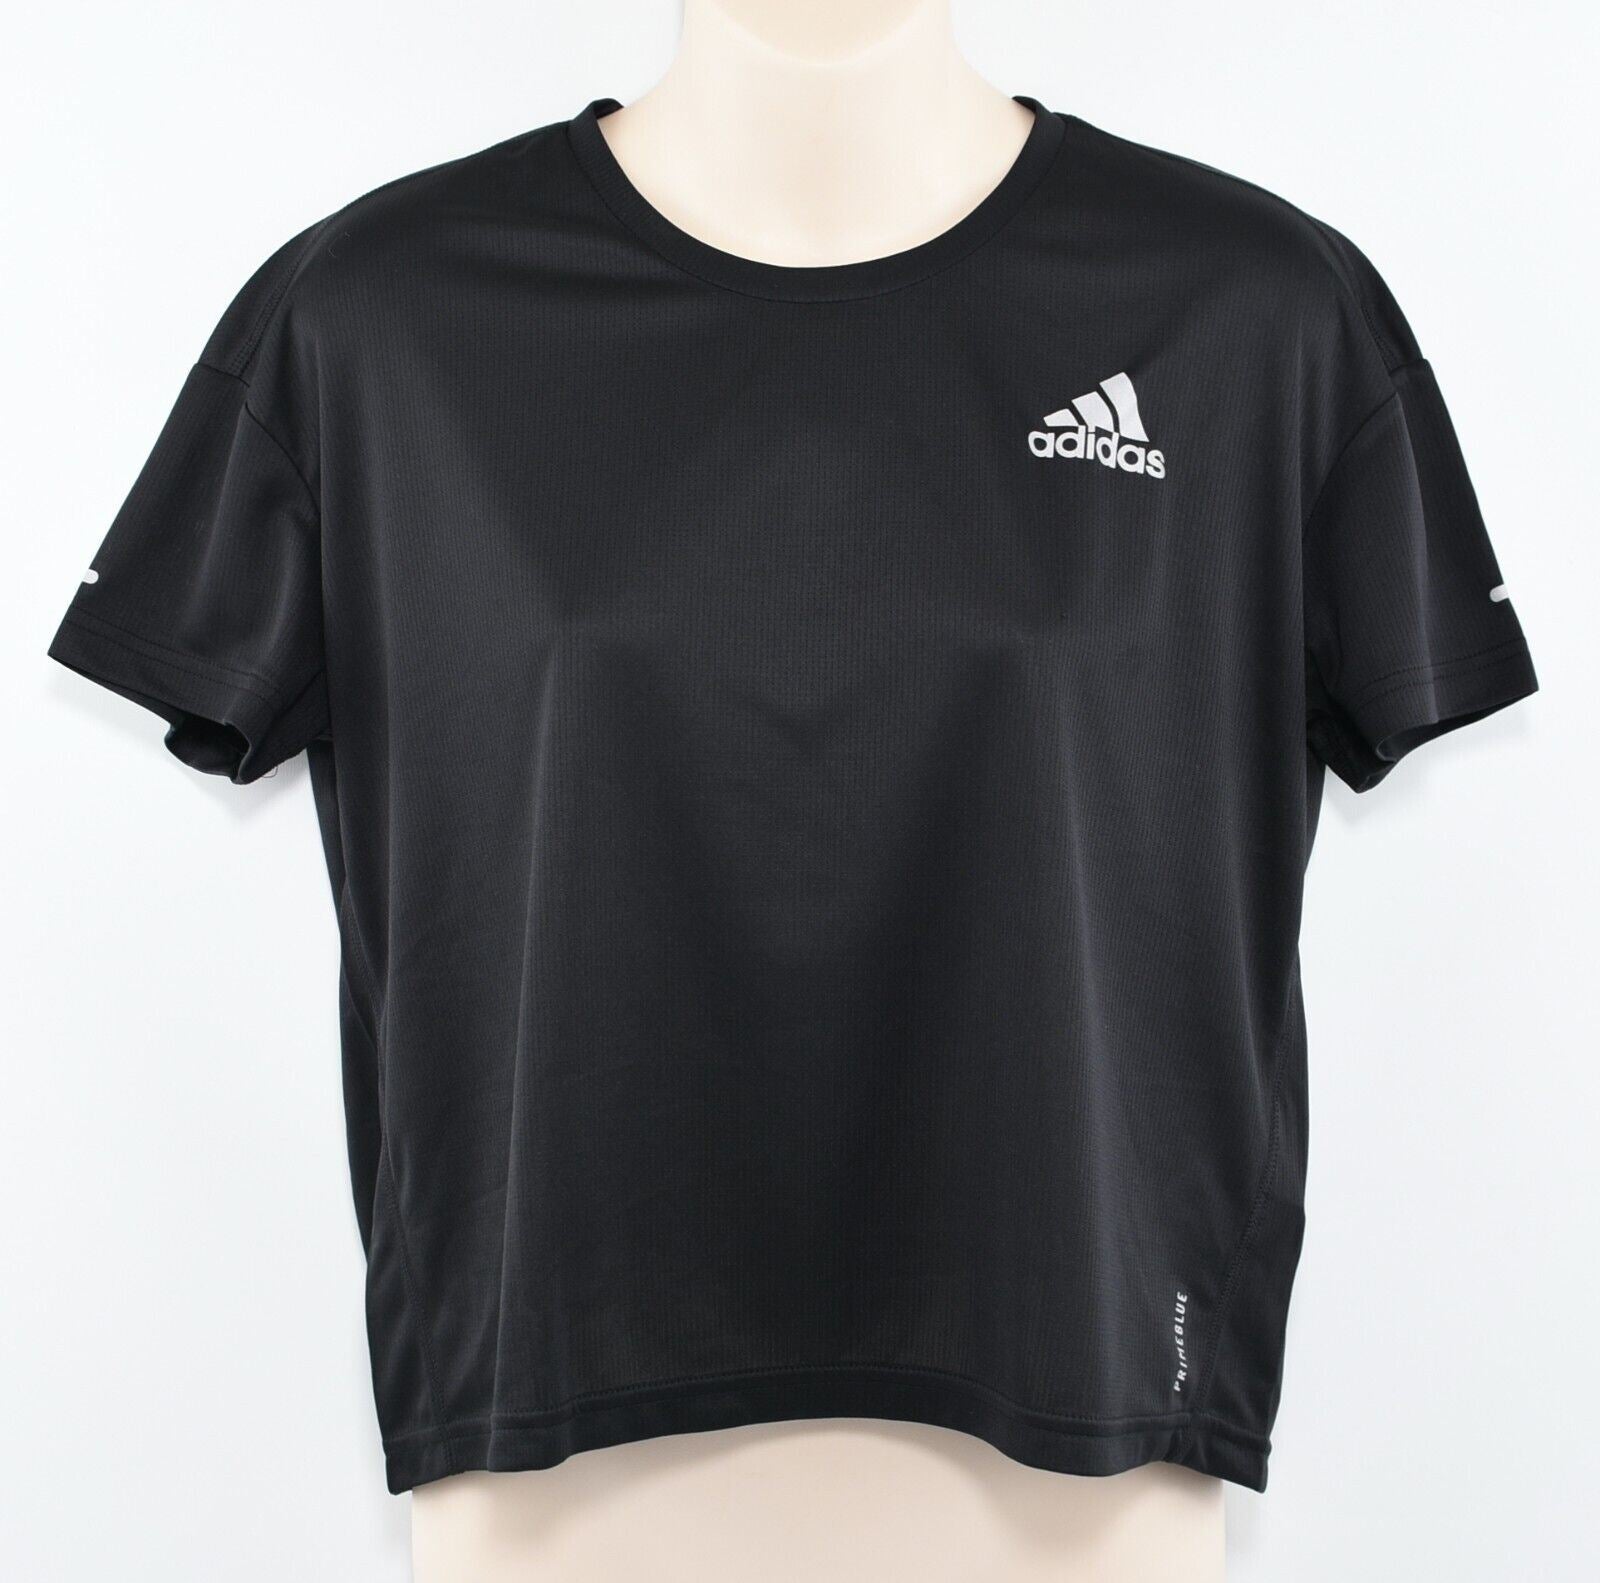 ADIDAS Women's Primeblue Sports Running Tee, T-shirt, Black, size S (UK 8-10)